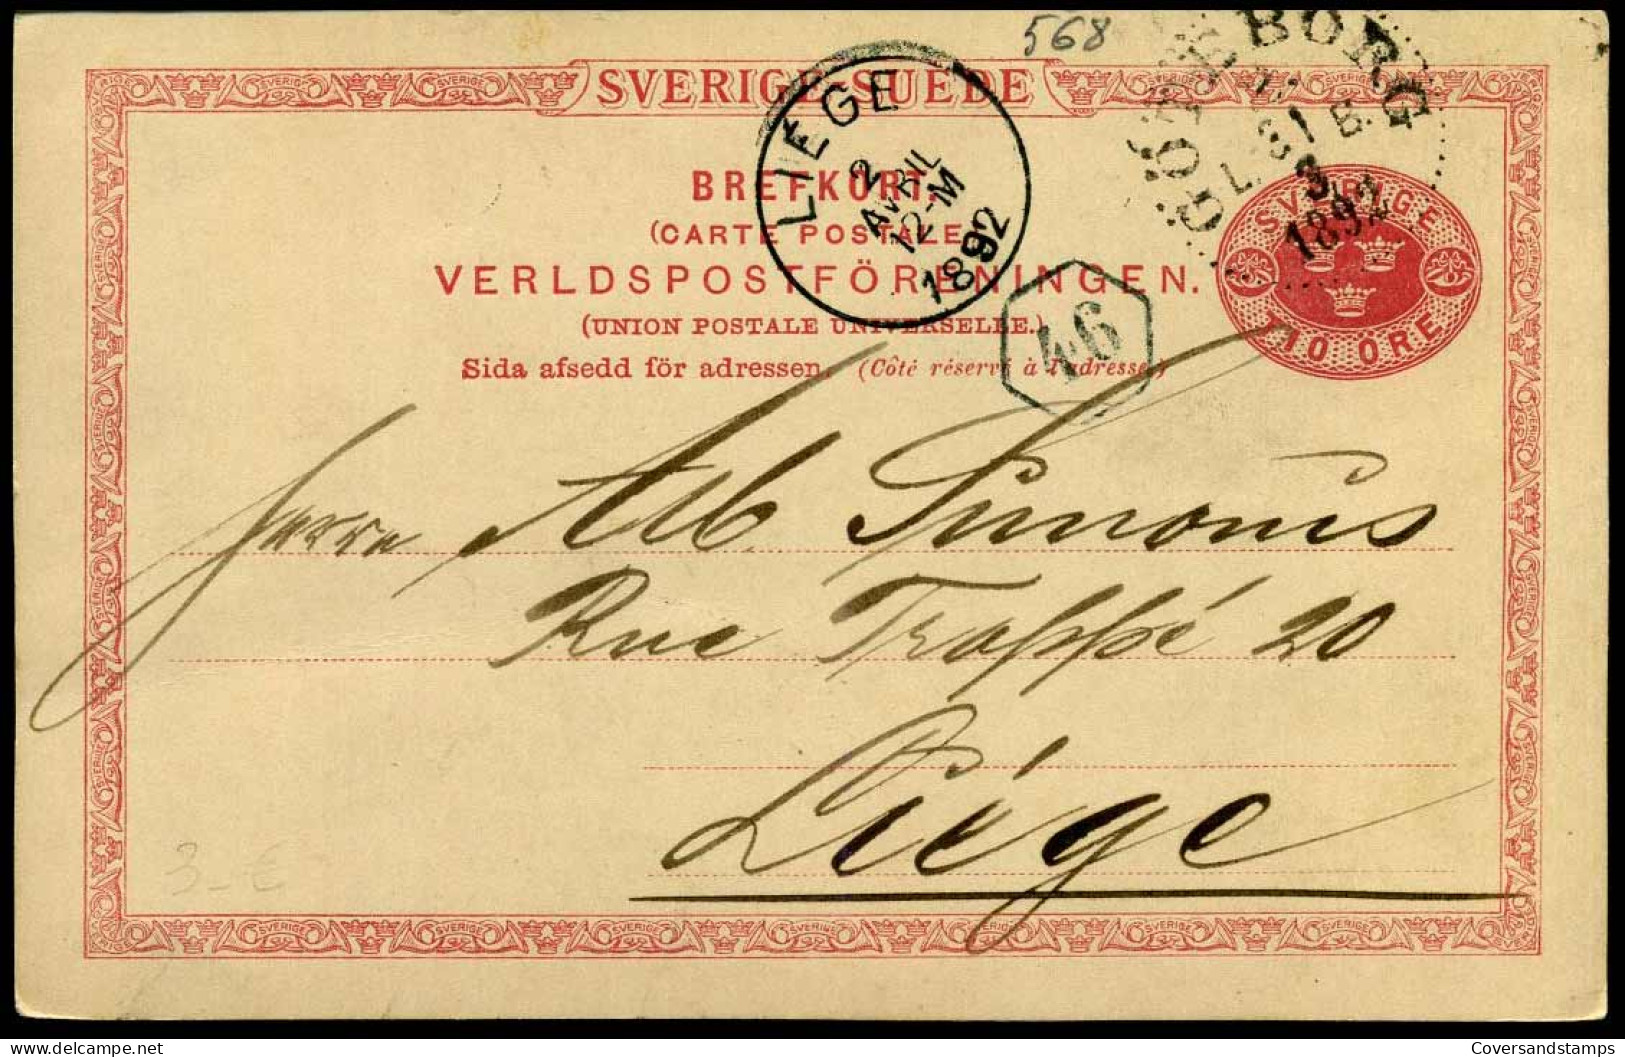 Brefkort (Carte Postale) To Liège, Belgium In 1892 - 'Wilh. Denninghoff, Göteborg' - Postal Stationery